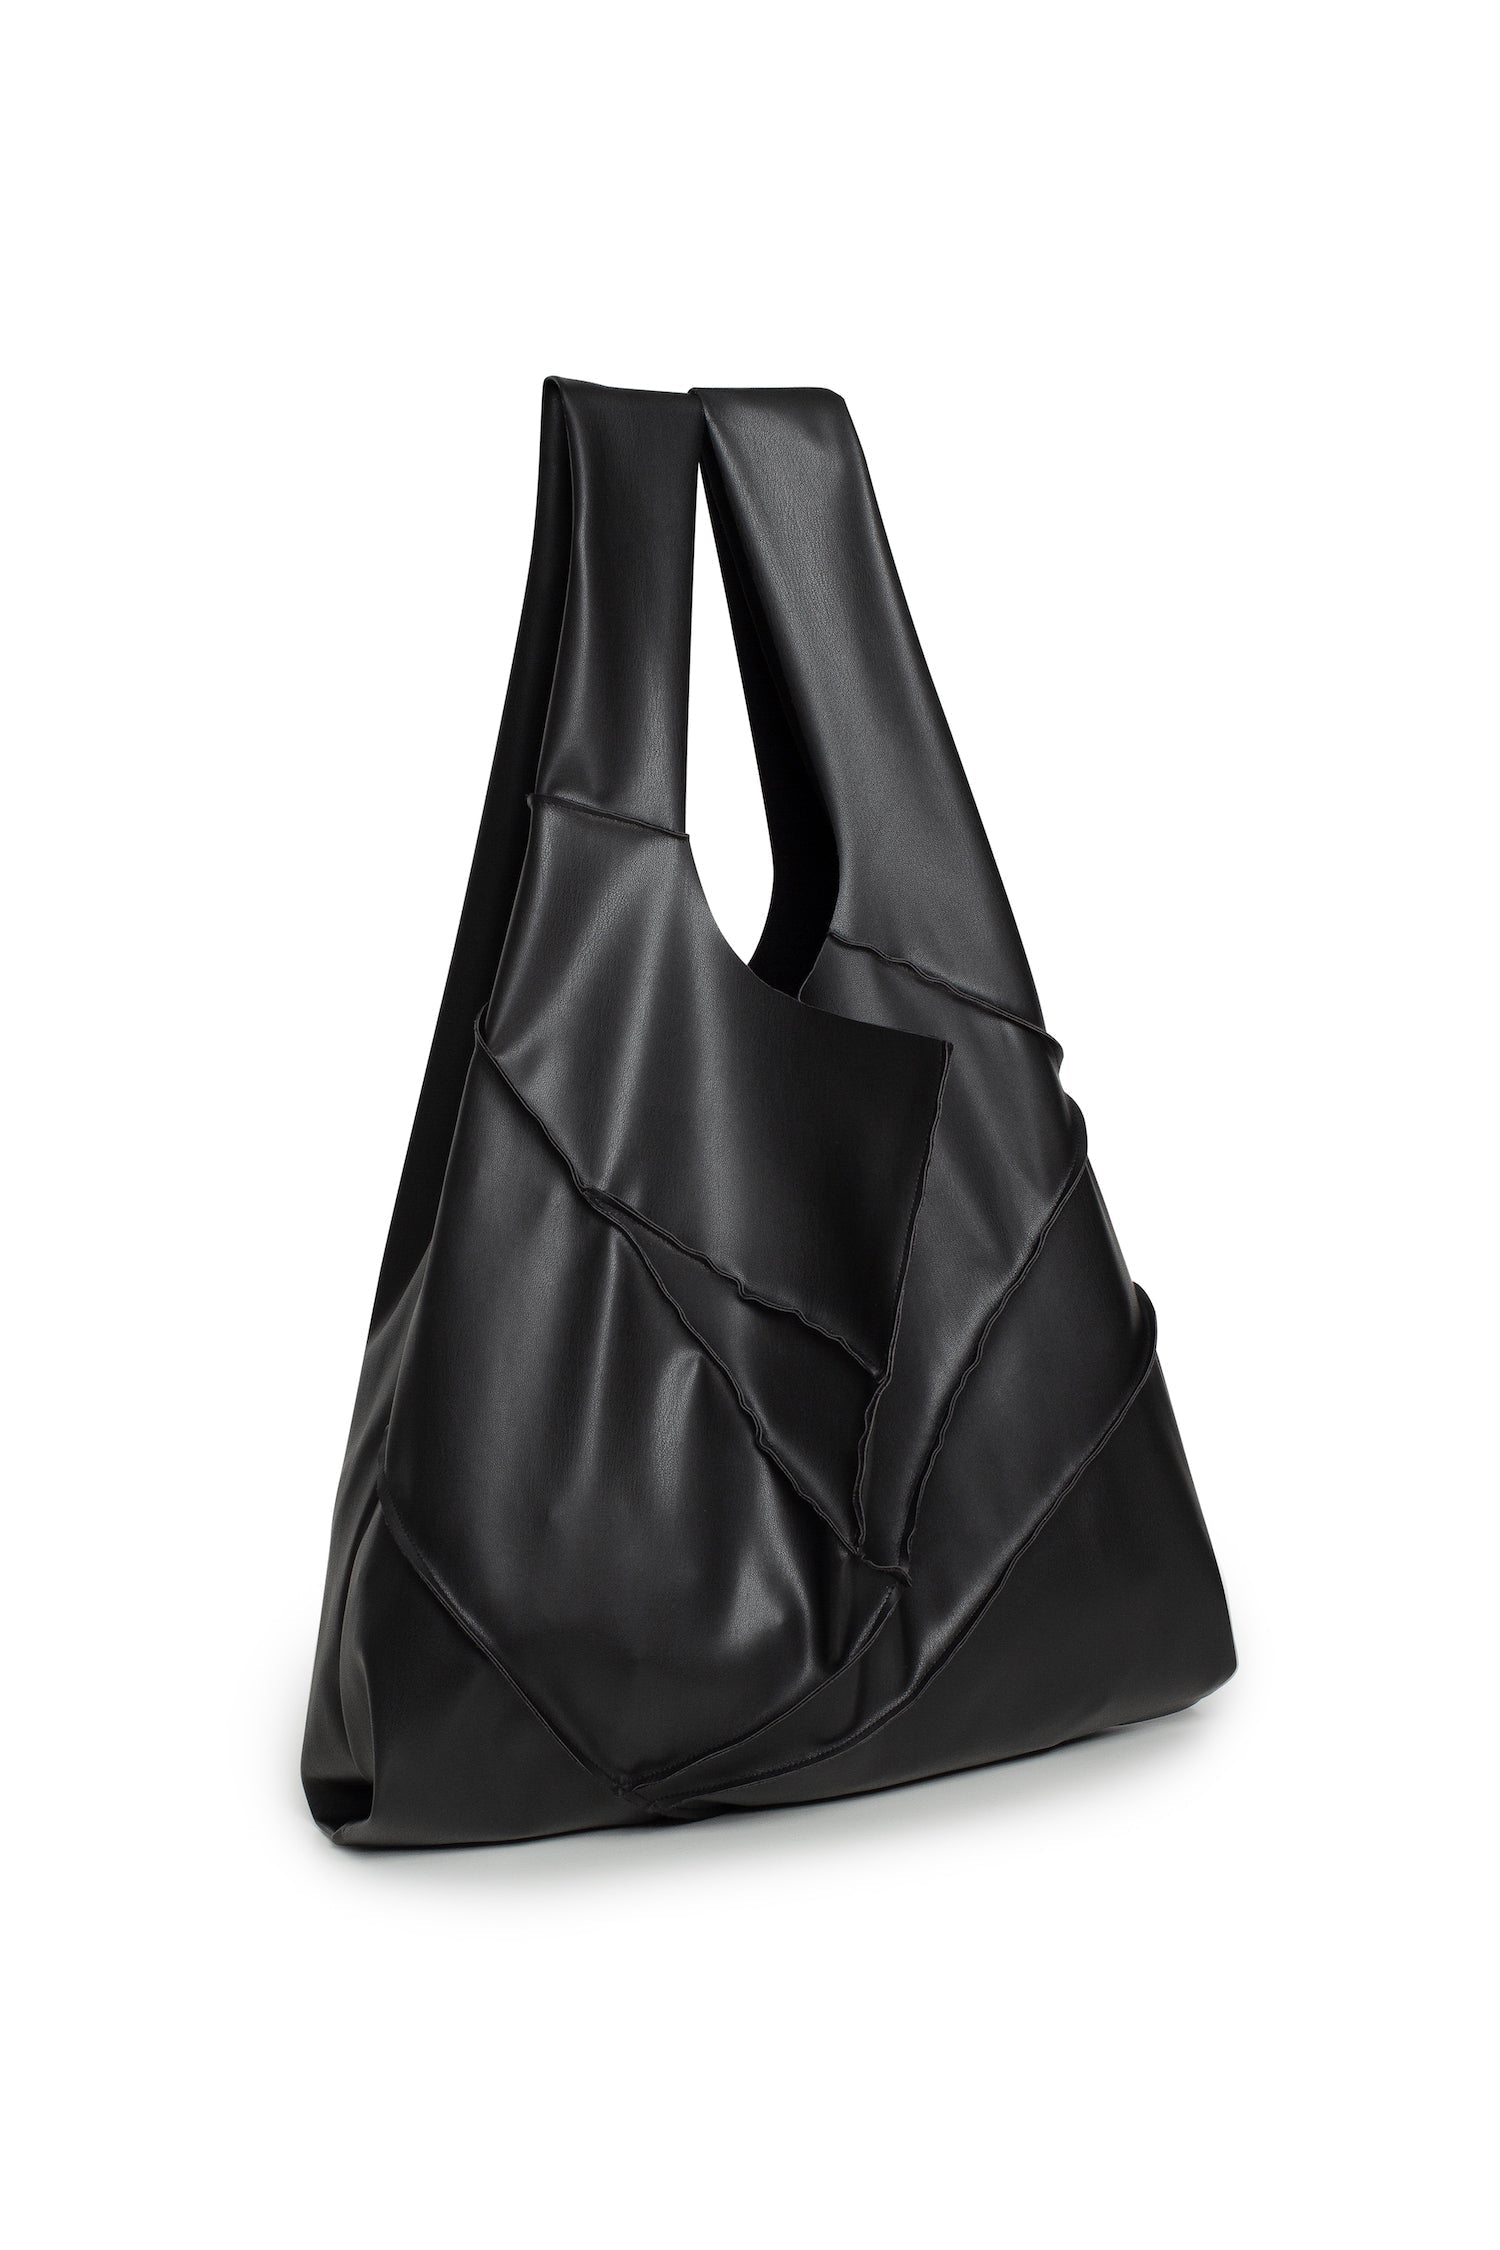 MDNT45 One size / Black Buntglas bag black